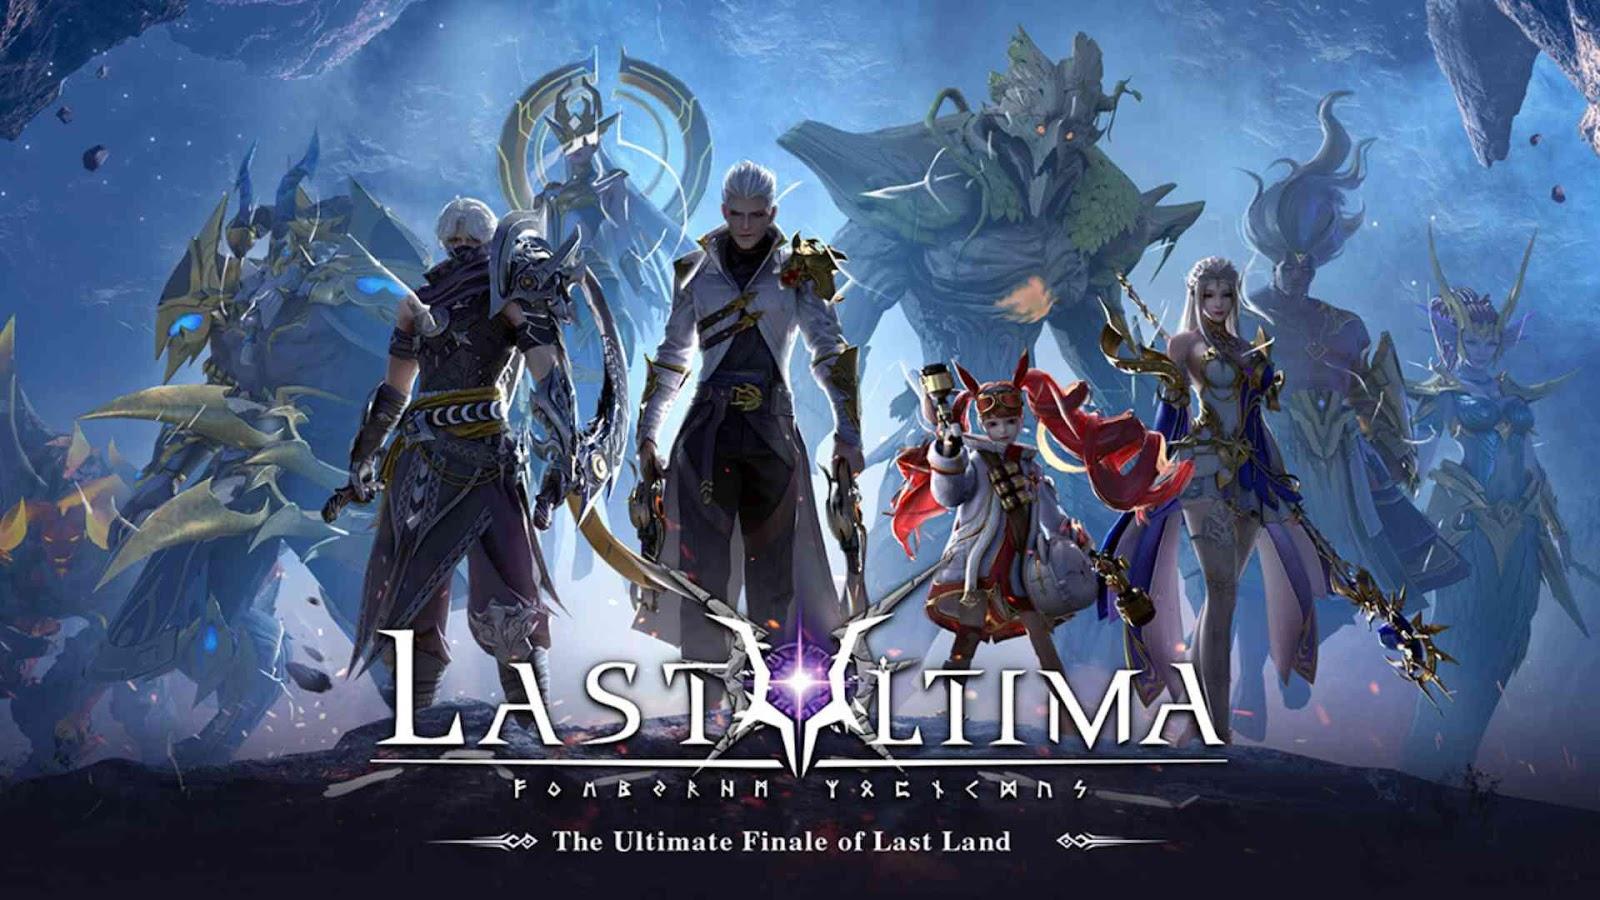 Last Ultima